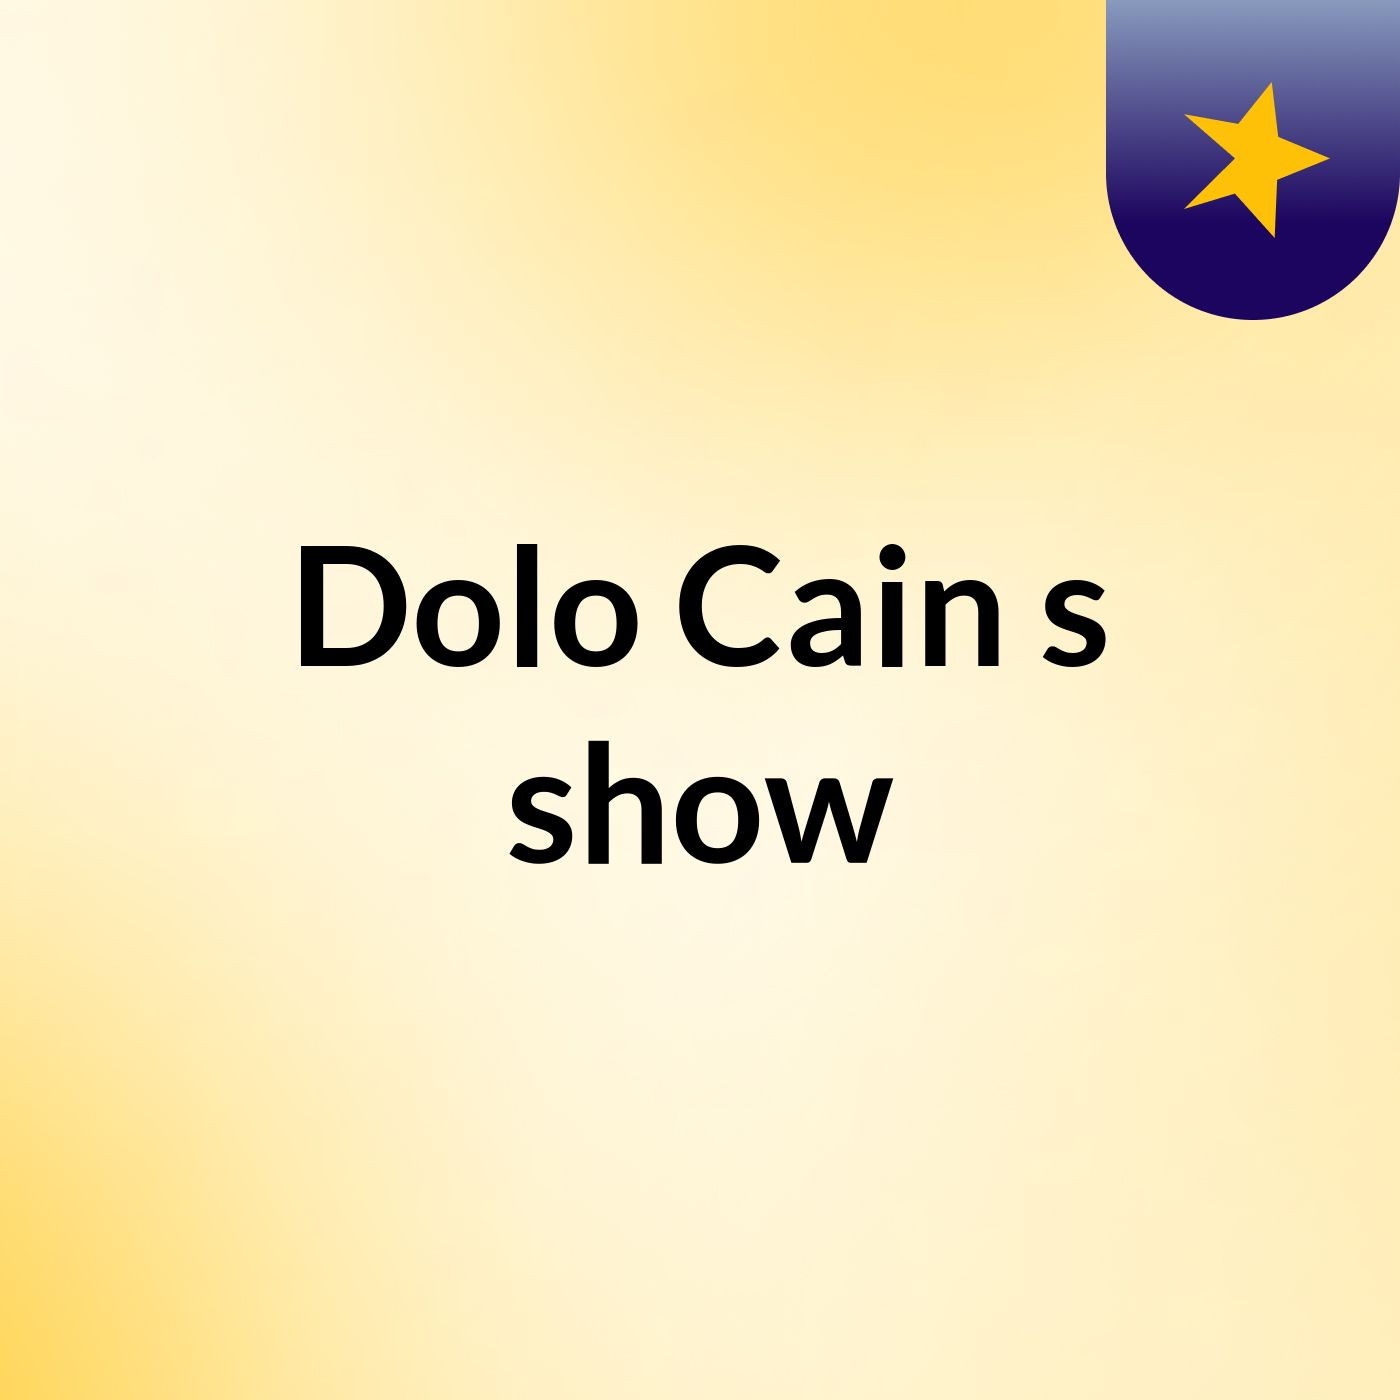 Dolo Cain's show